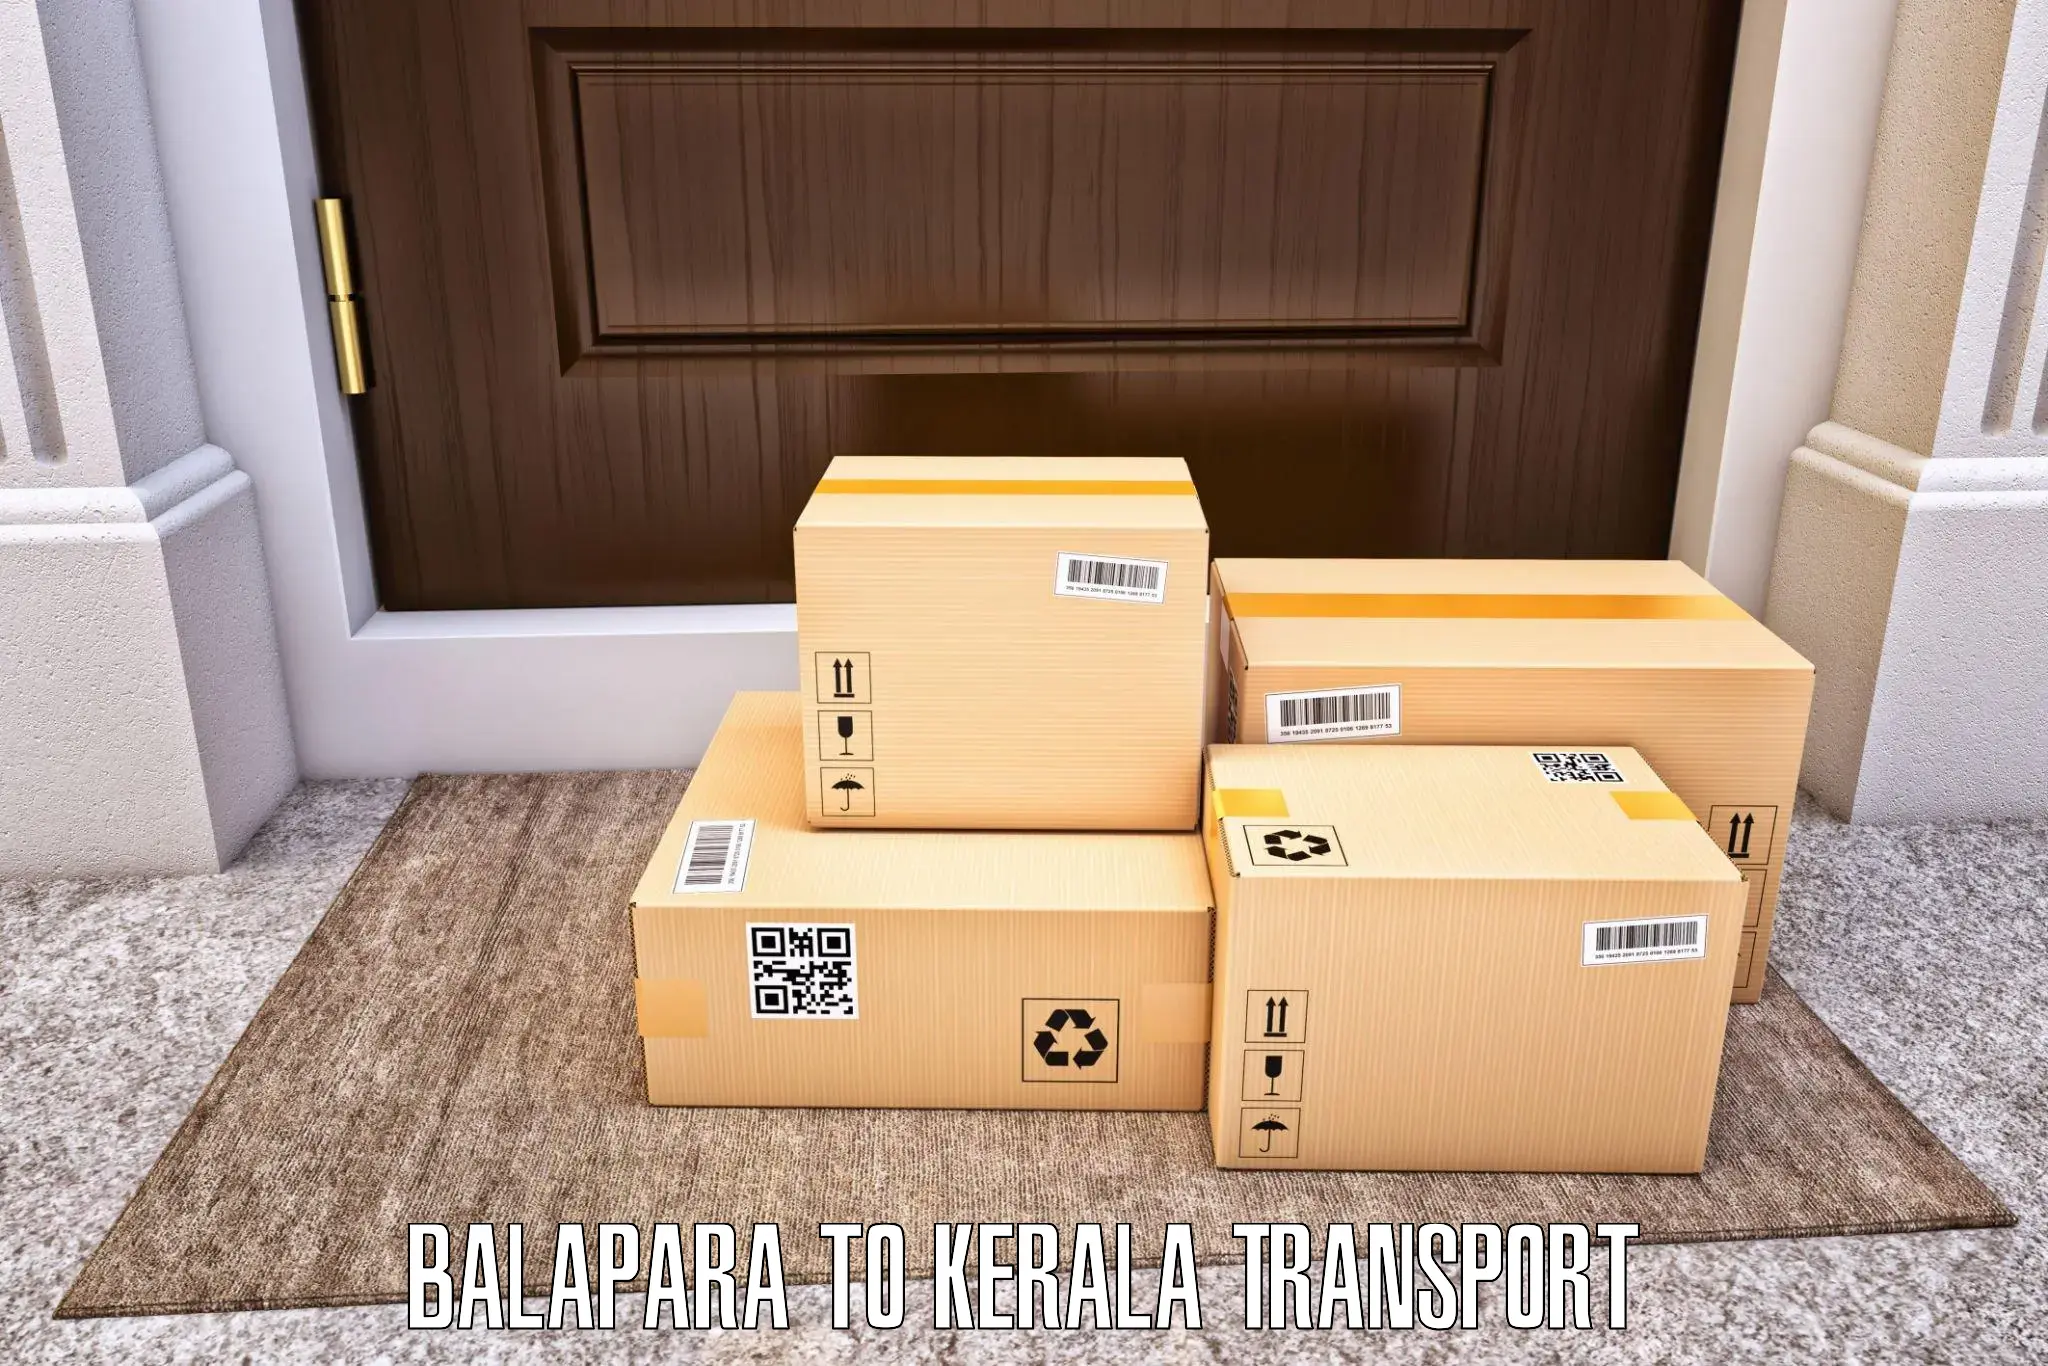 Nearby transport service Balapara to Mahe